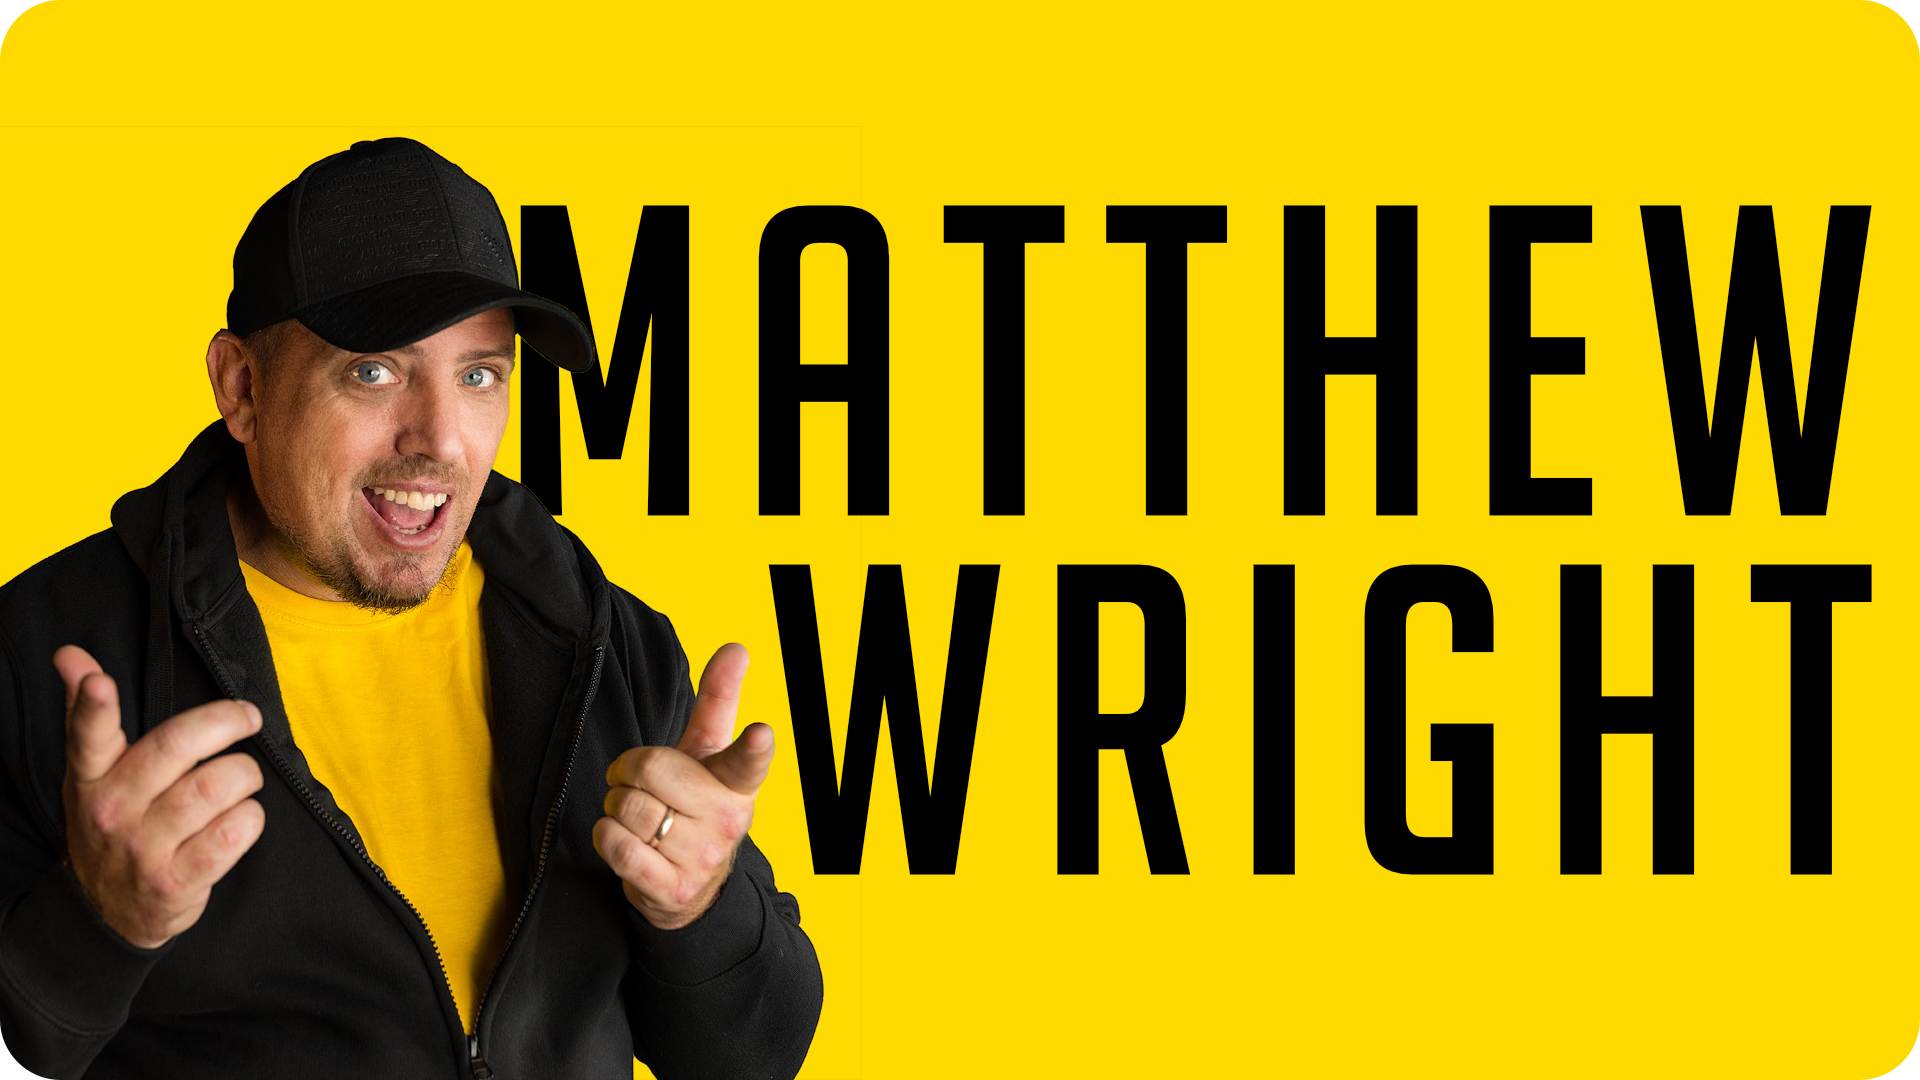 Matthew wright